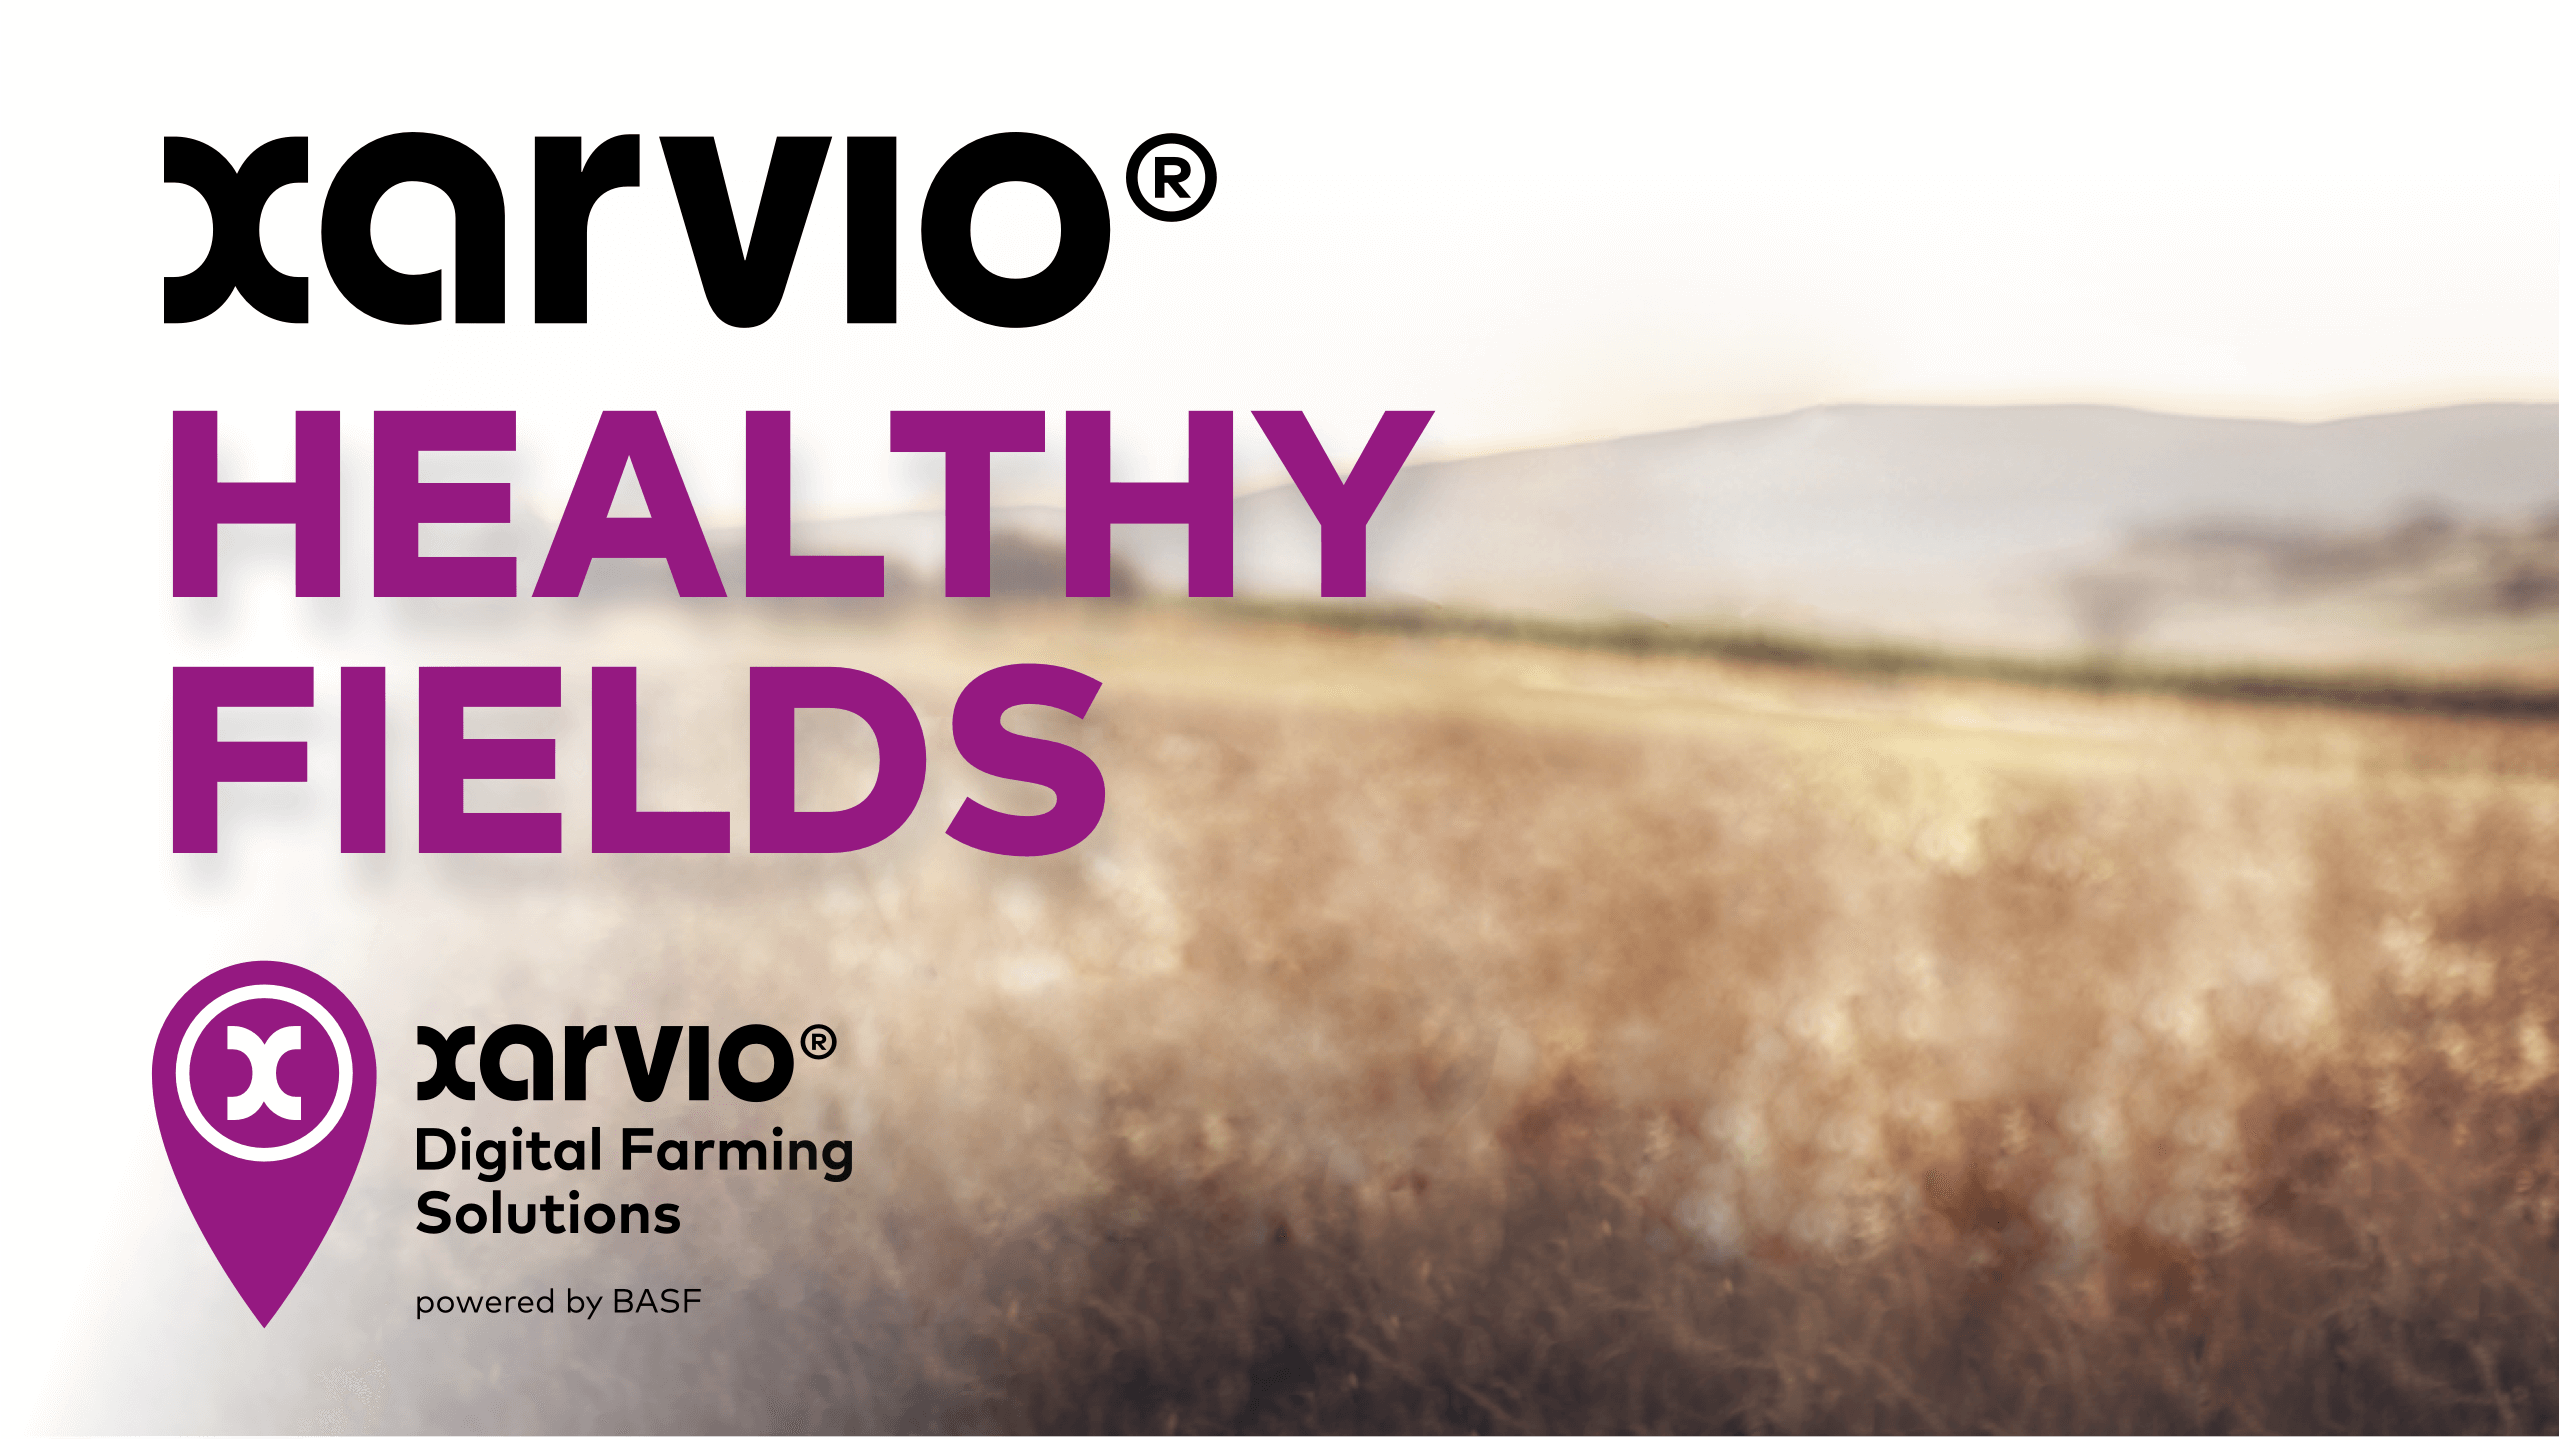 xarvio® HEALTHY FIELDS video